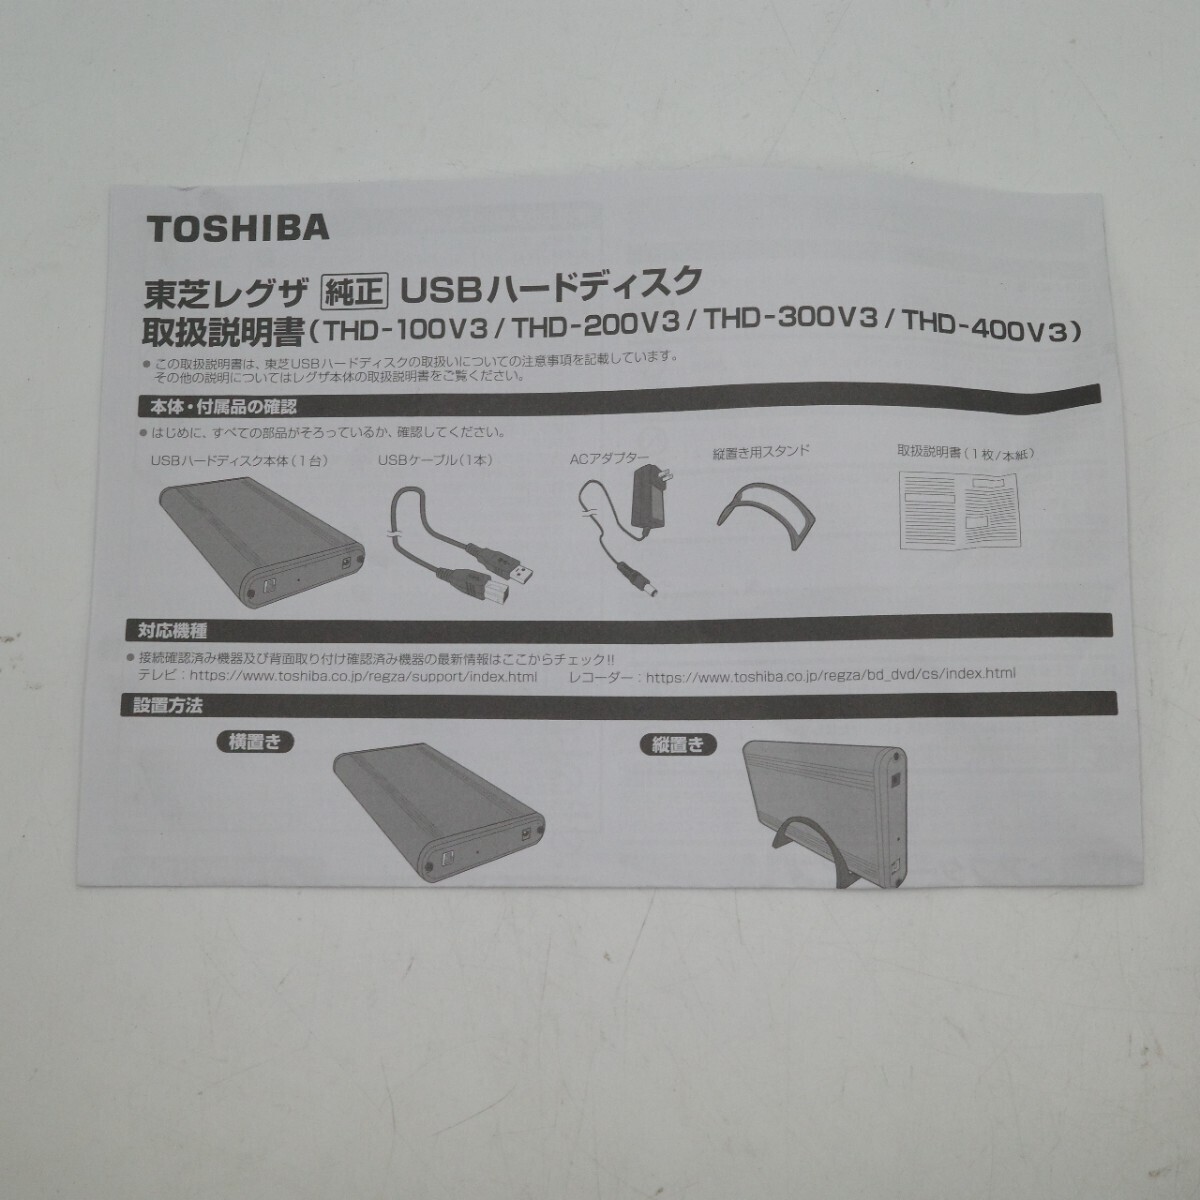 TOSHIBA Toshiba REGZA Regza USB hard disk time shift machine correspondence 1TB THD-100V3 attached outside HDD operation not yet verification 